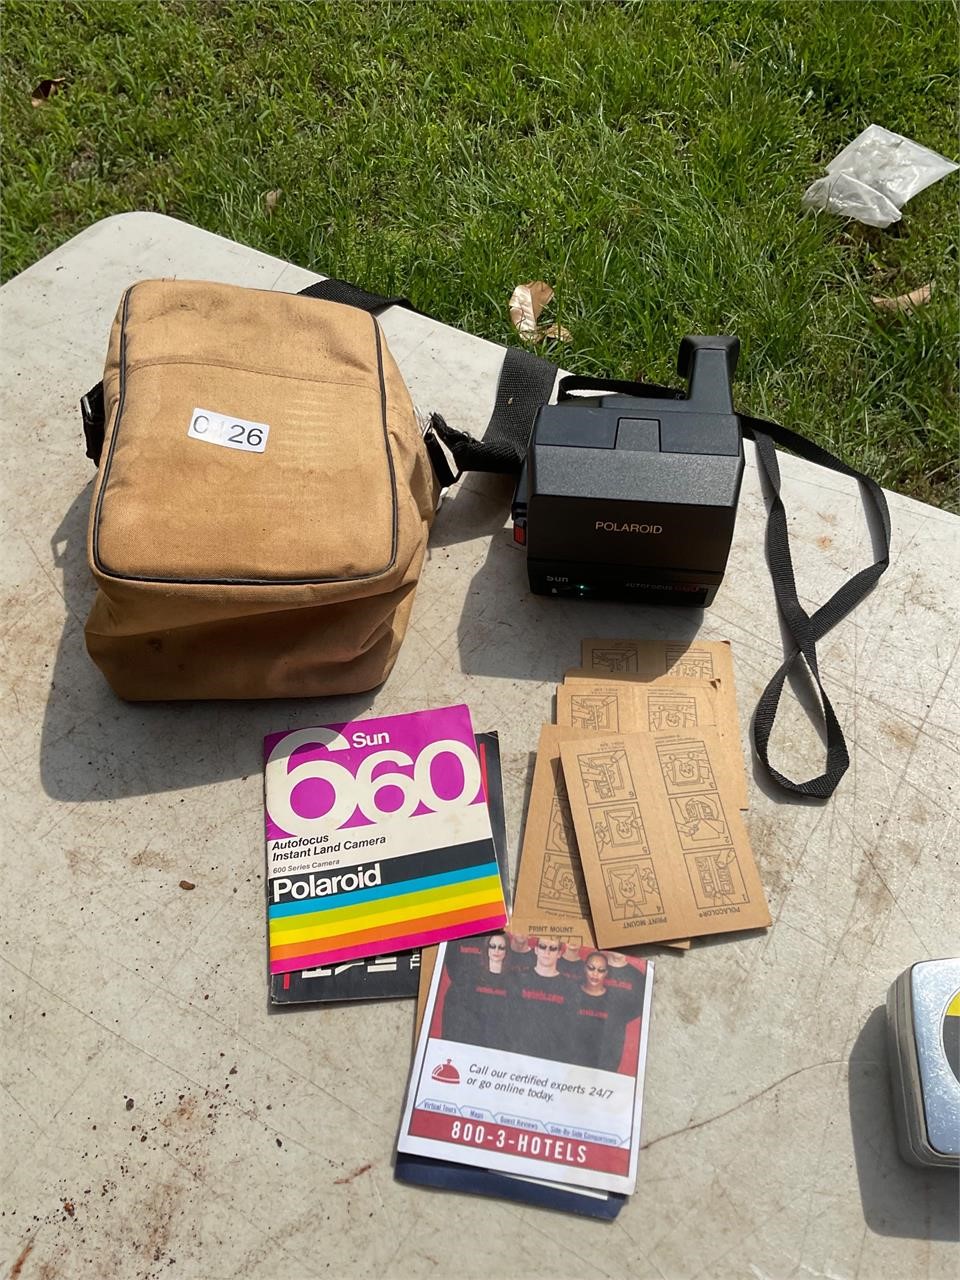 Polaroid Insta Land 660 camera & accessories